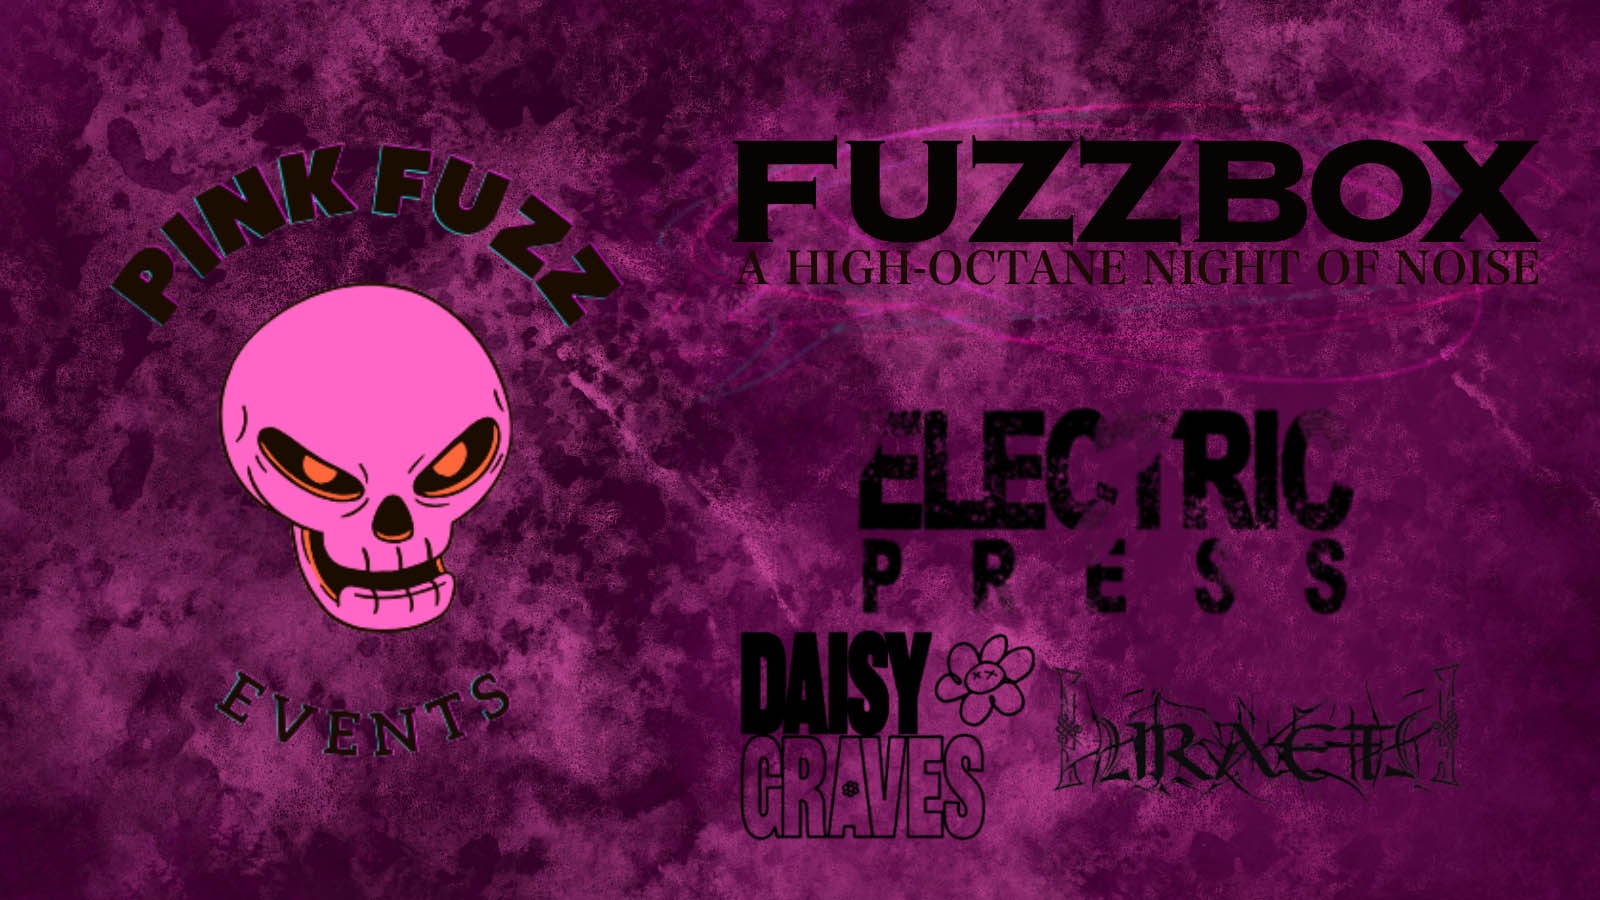 FUZZBOX: Electric Press + daisy graves & Hiraeth